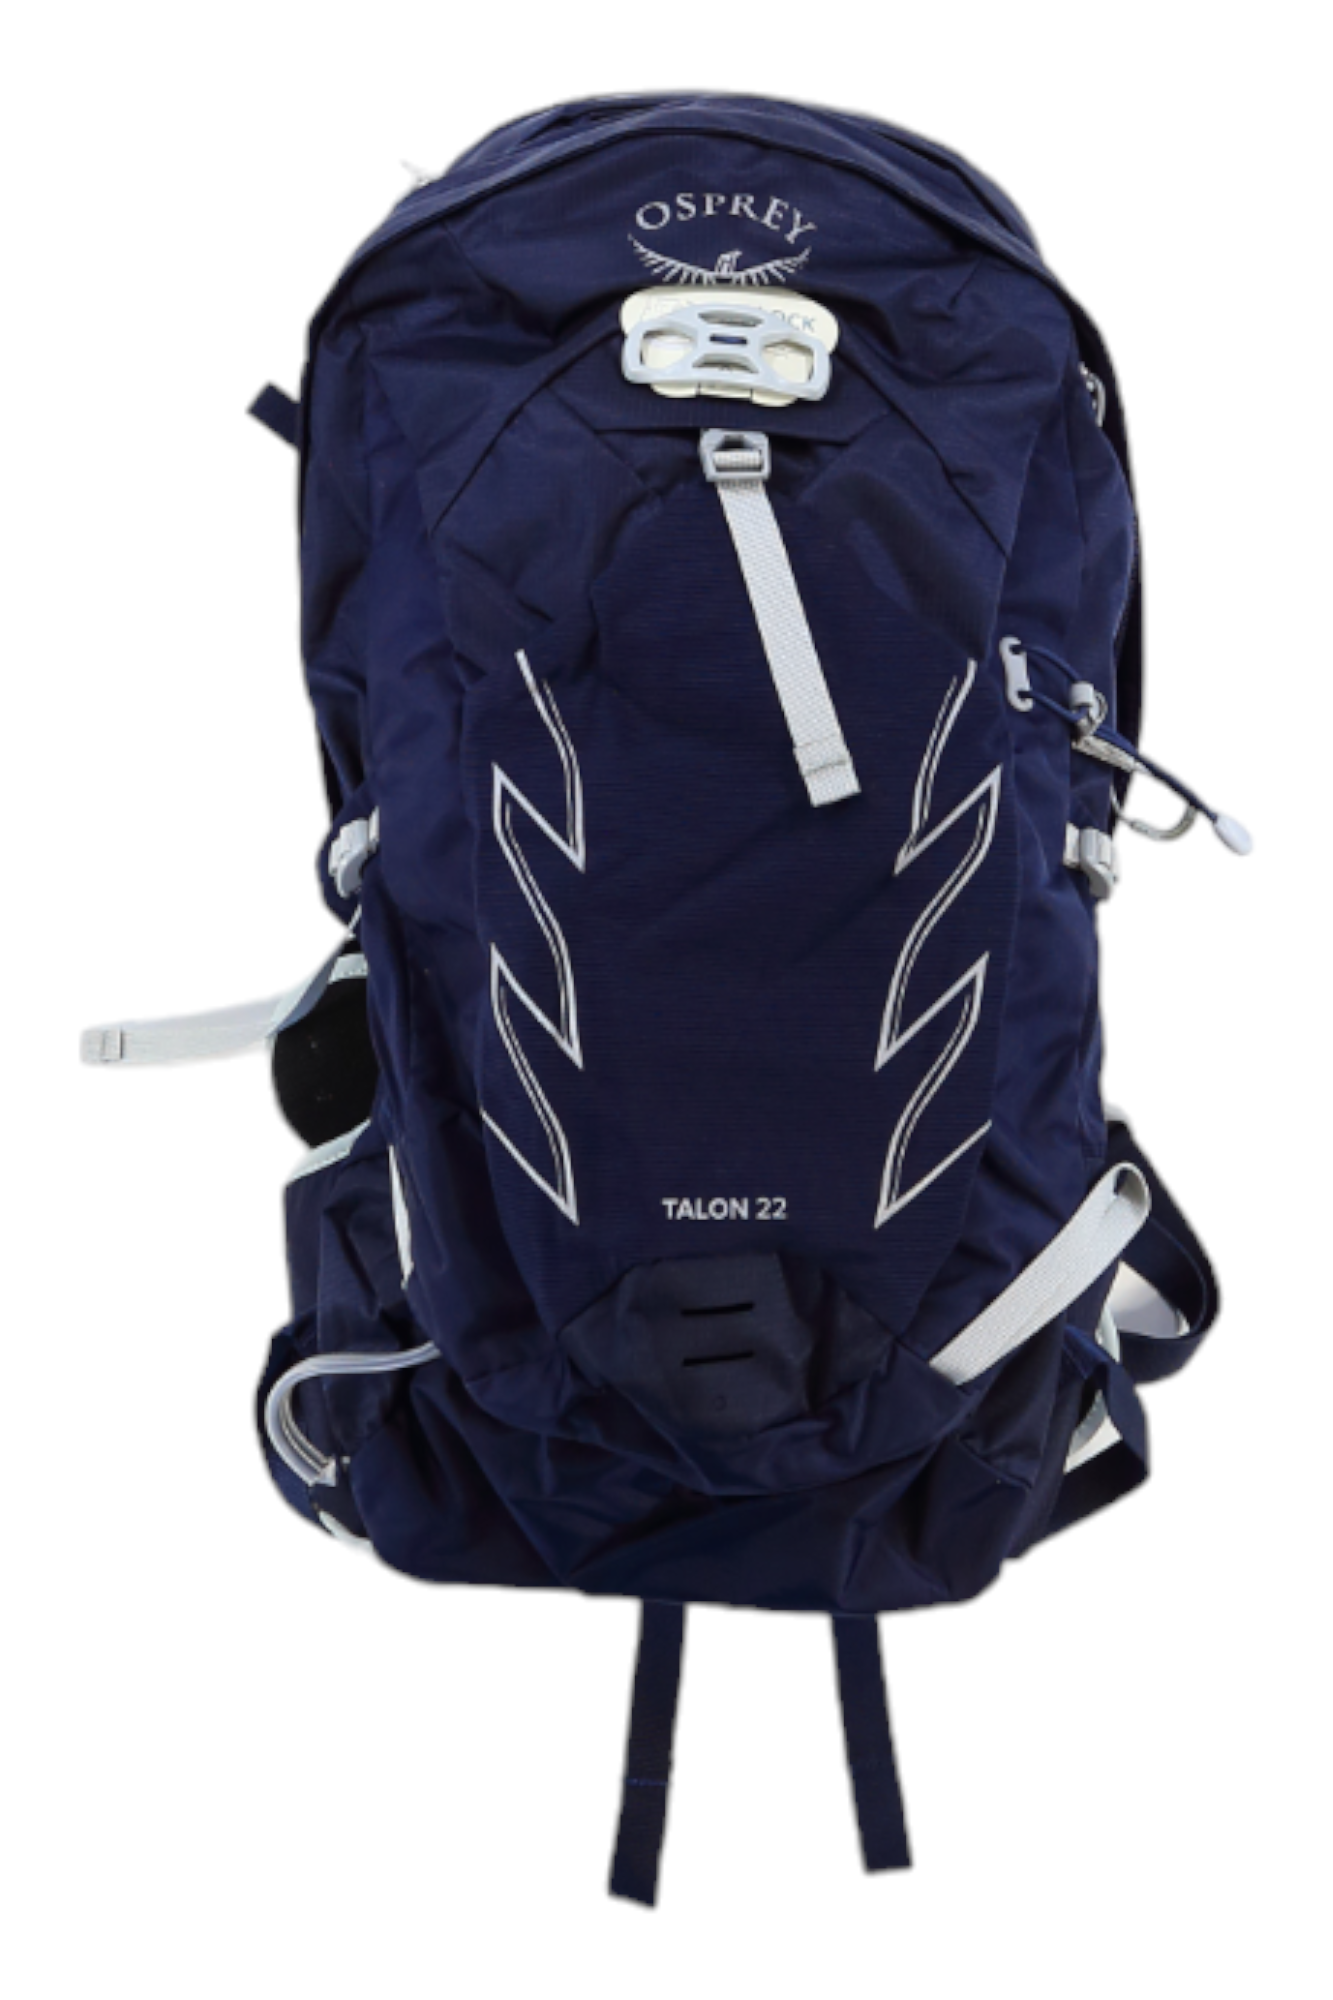 Osprey Mens Talon 22 Backpack - Extended Fit